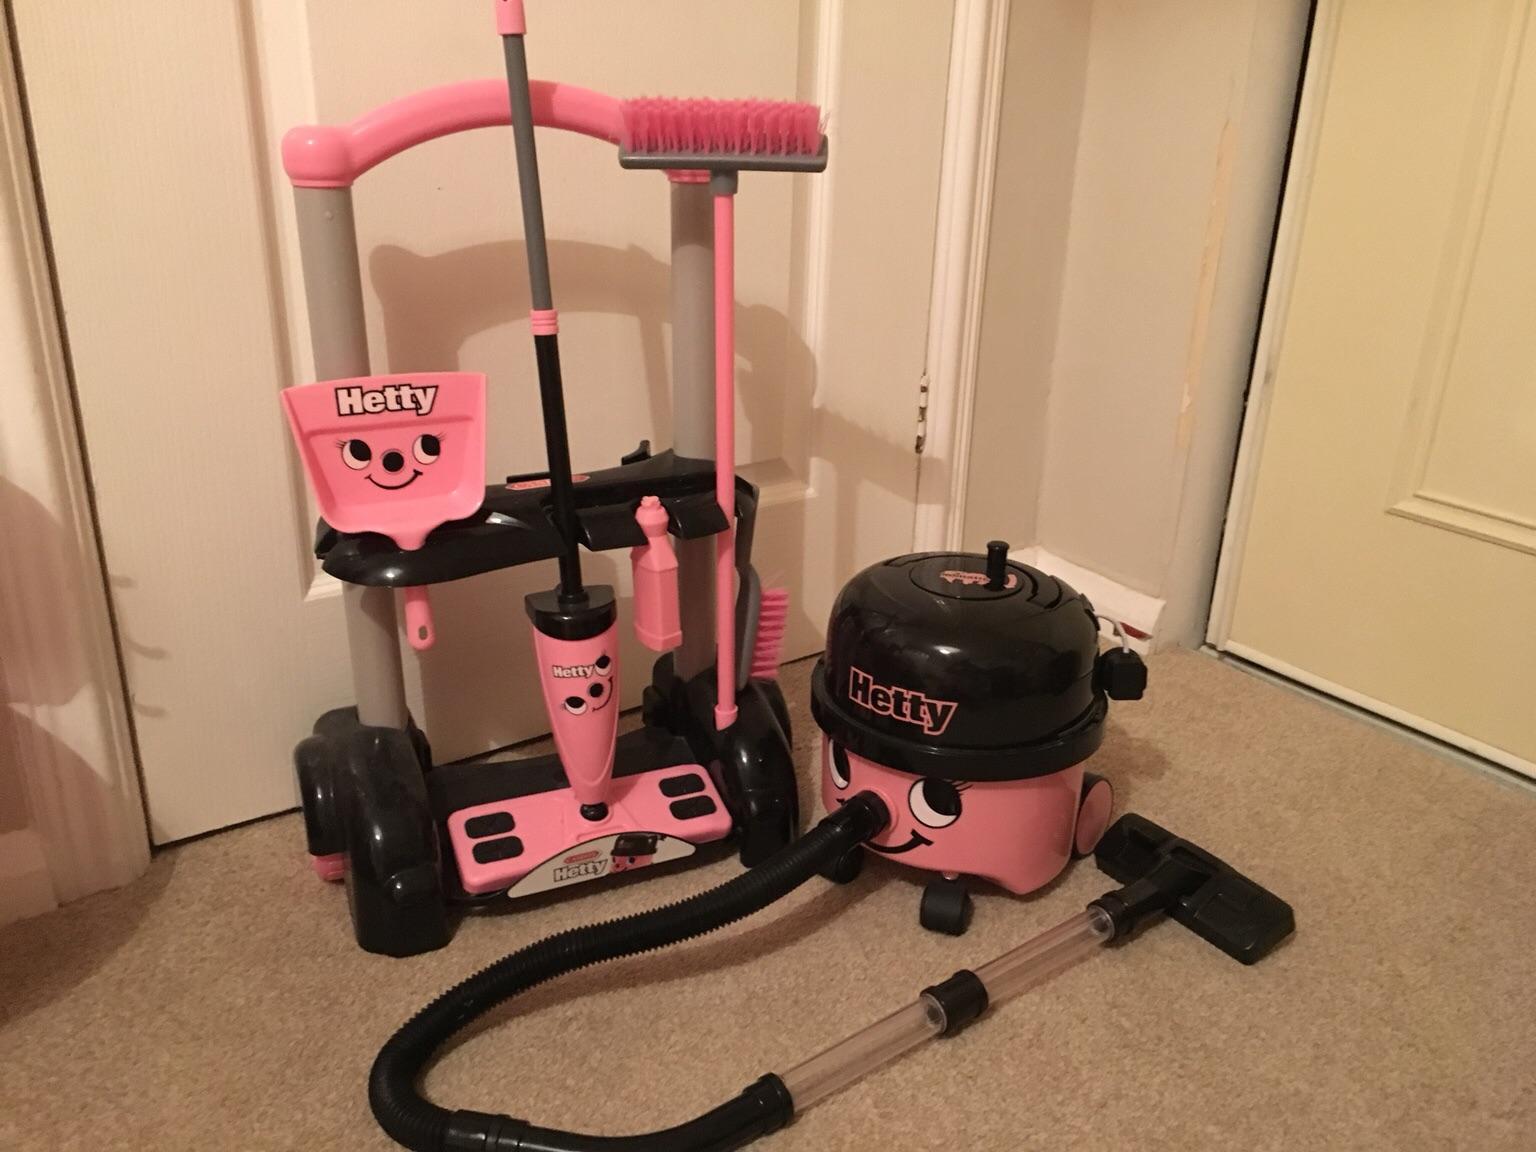 Pre School Kids Hetty Deluxe Cleaning Trolley Vacuum Cleaner Hoover Set New Pink 